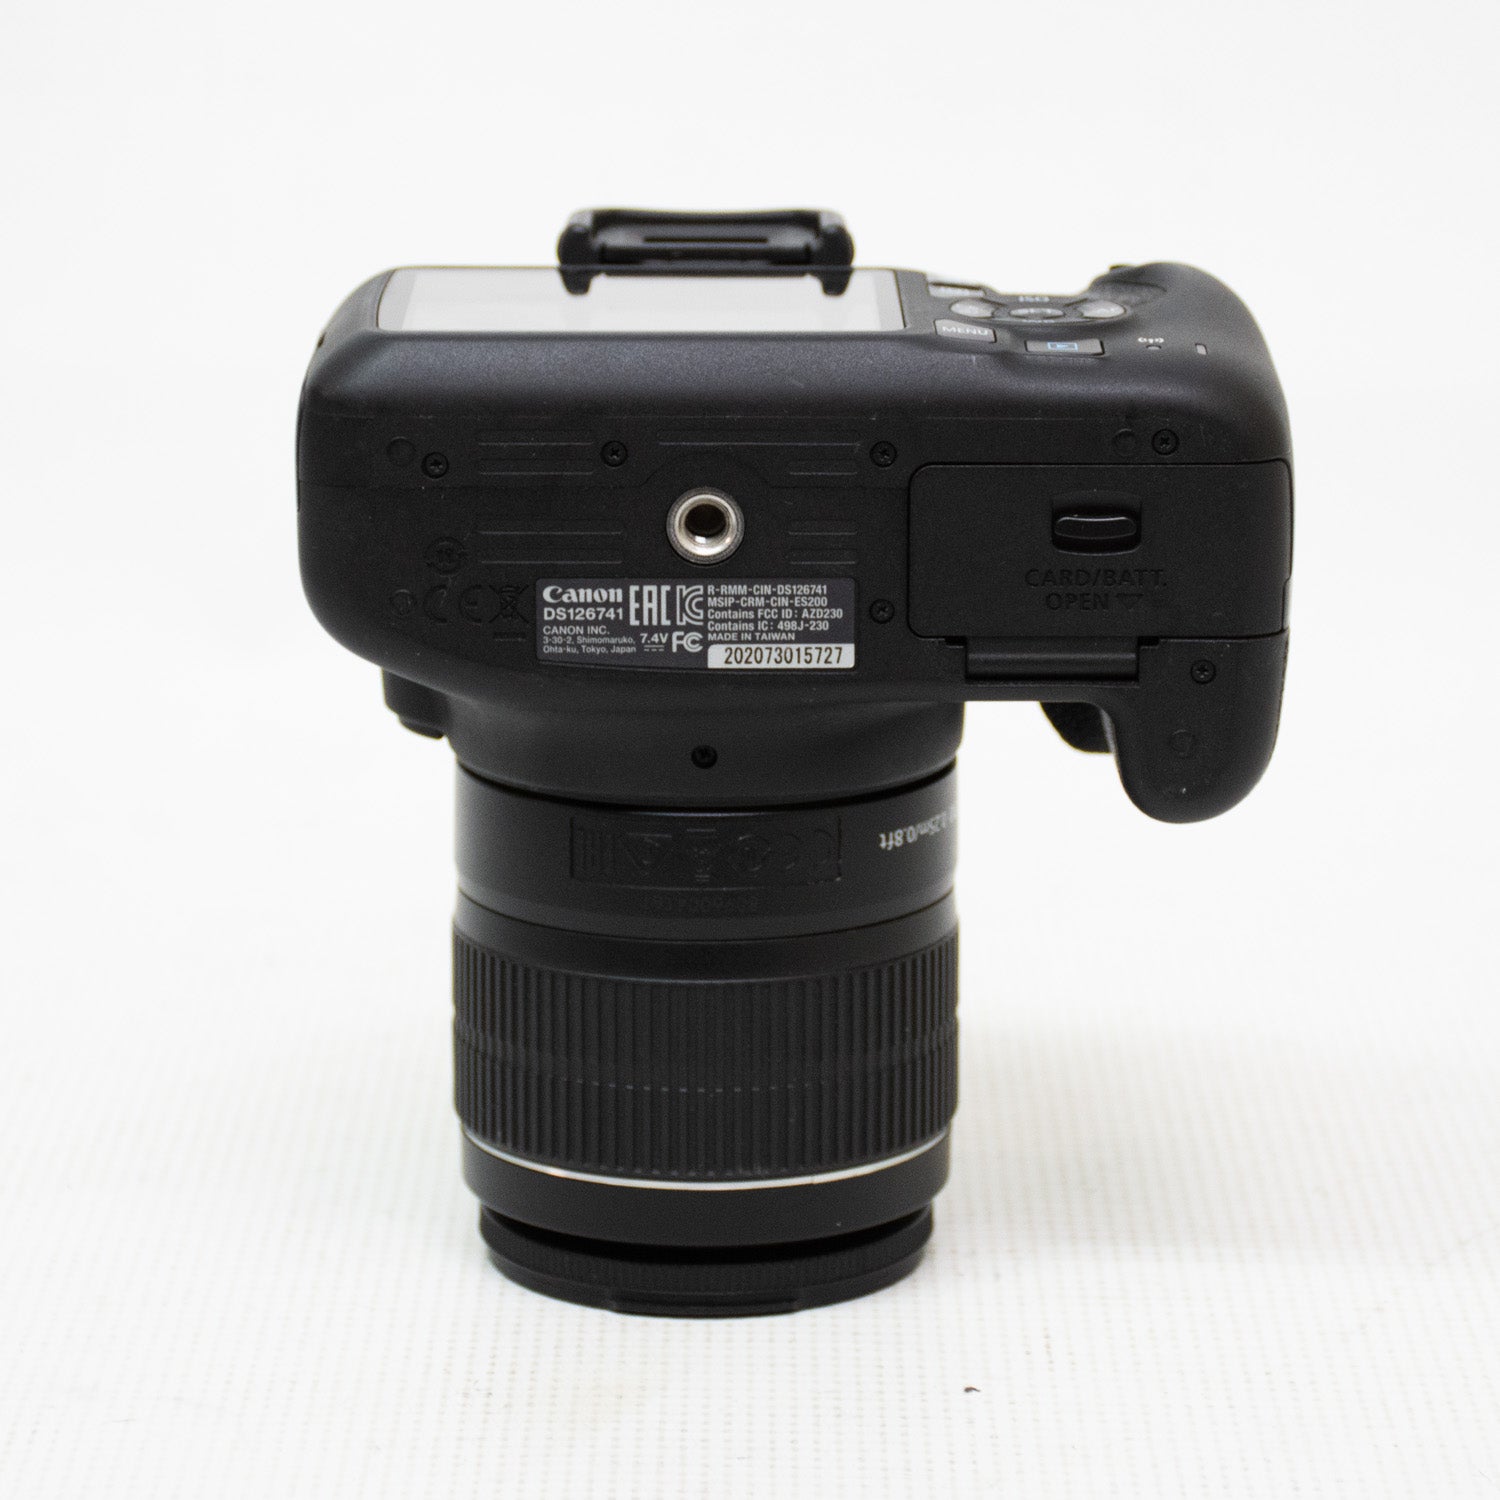 Canon Rebel T7 DSLR Camera w/ 18-55mm Lens